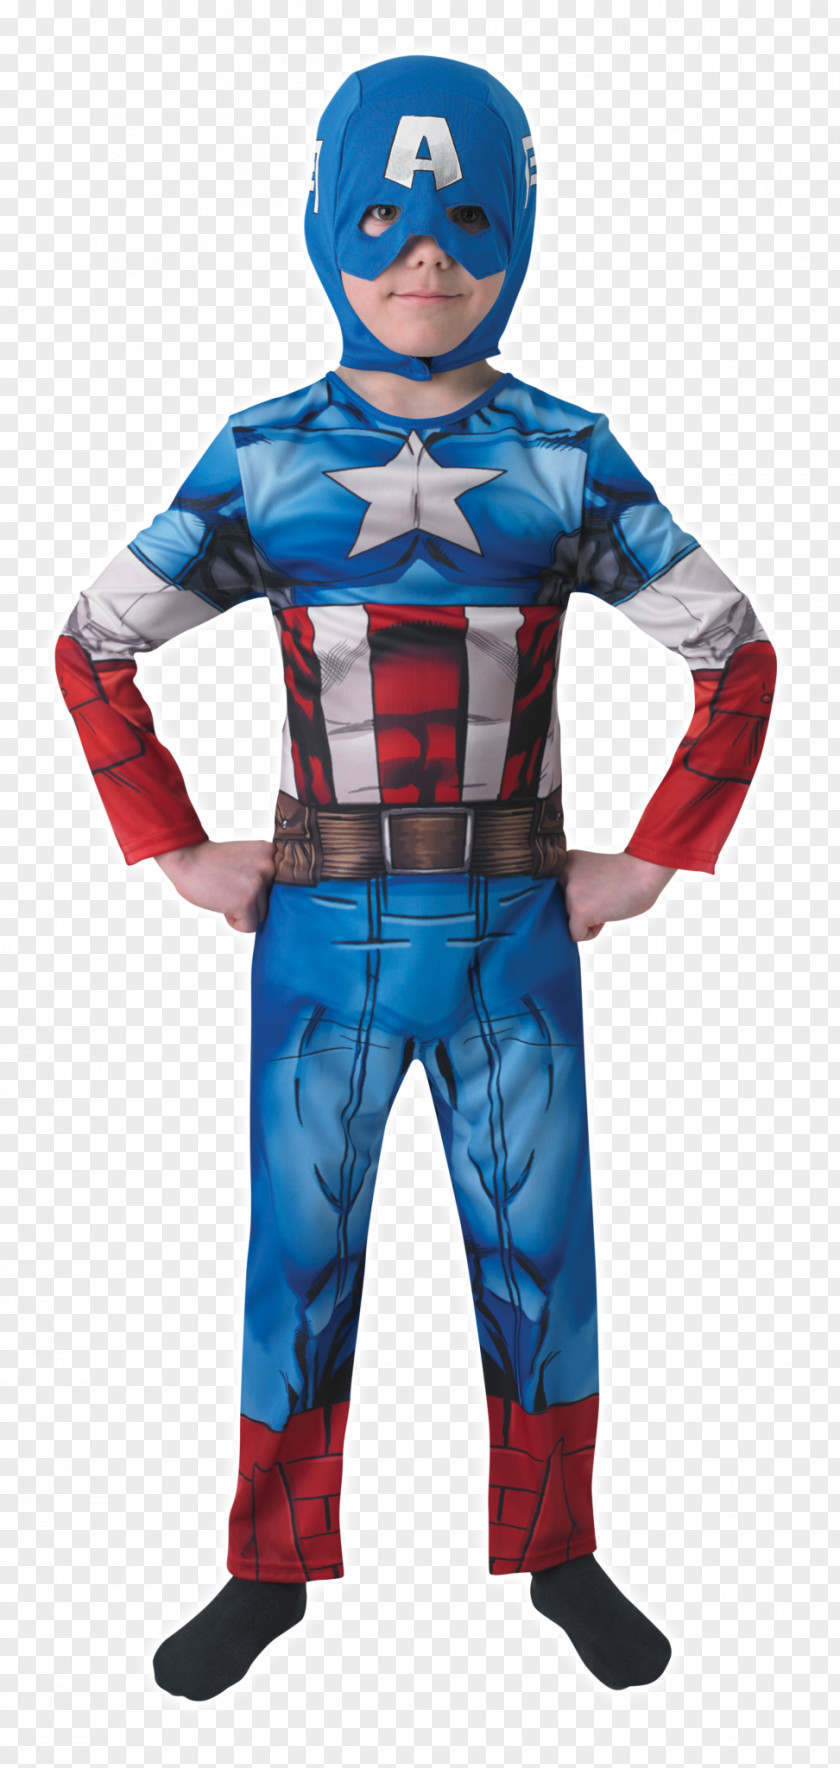 Captain America Costume Party Child Superhero PNG